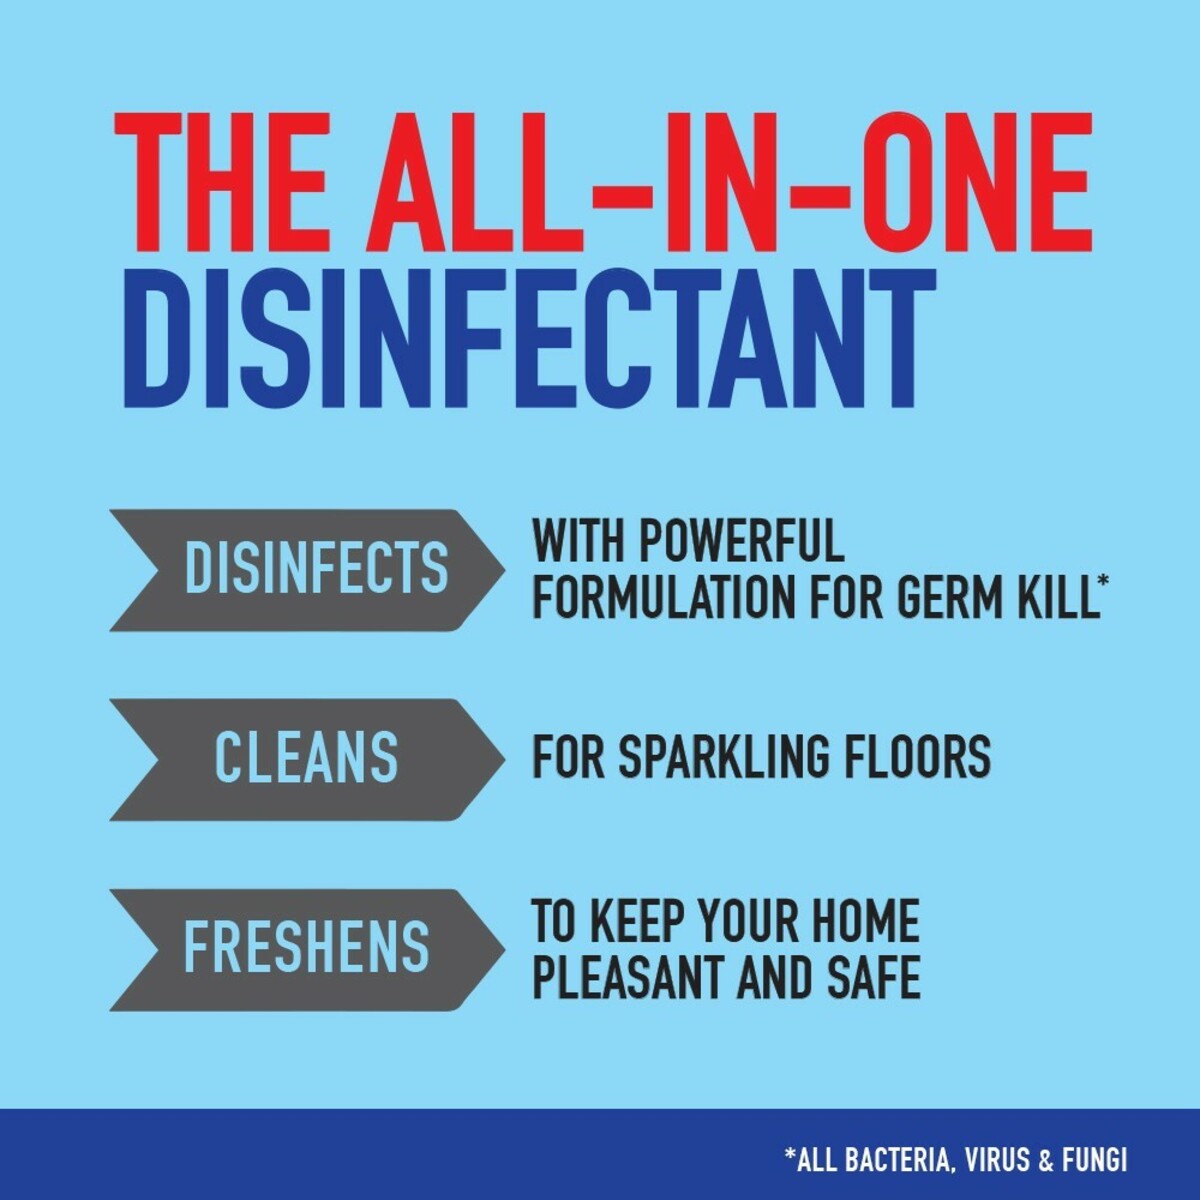 Domex Disinfectant Floor Cleaner 1Litre